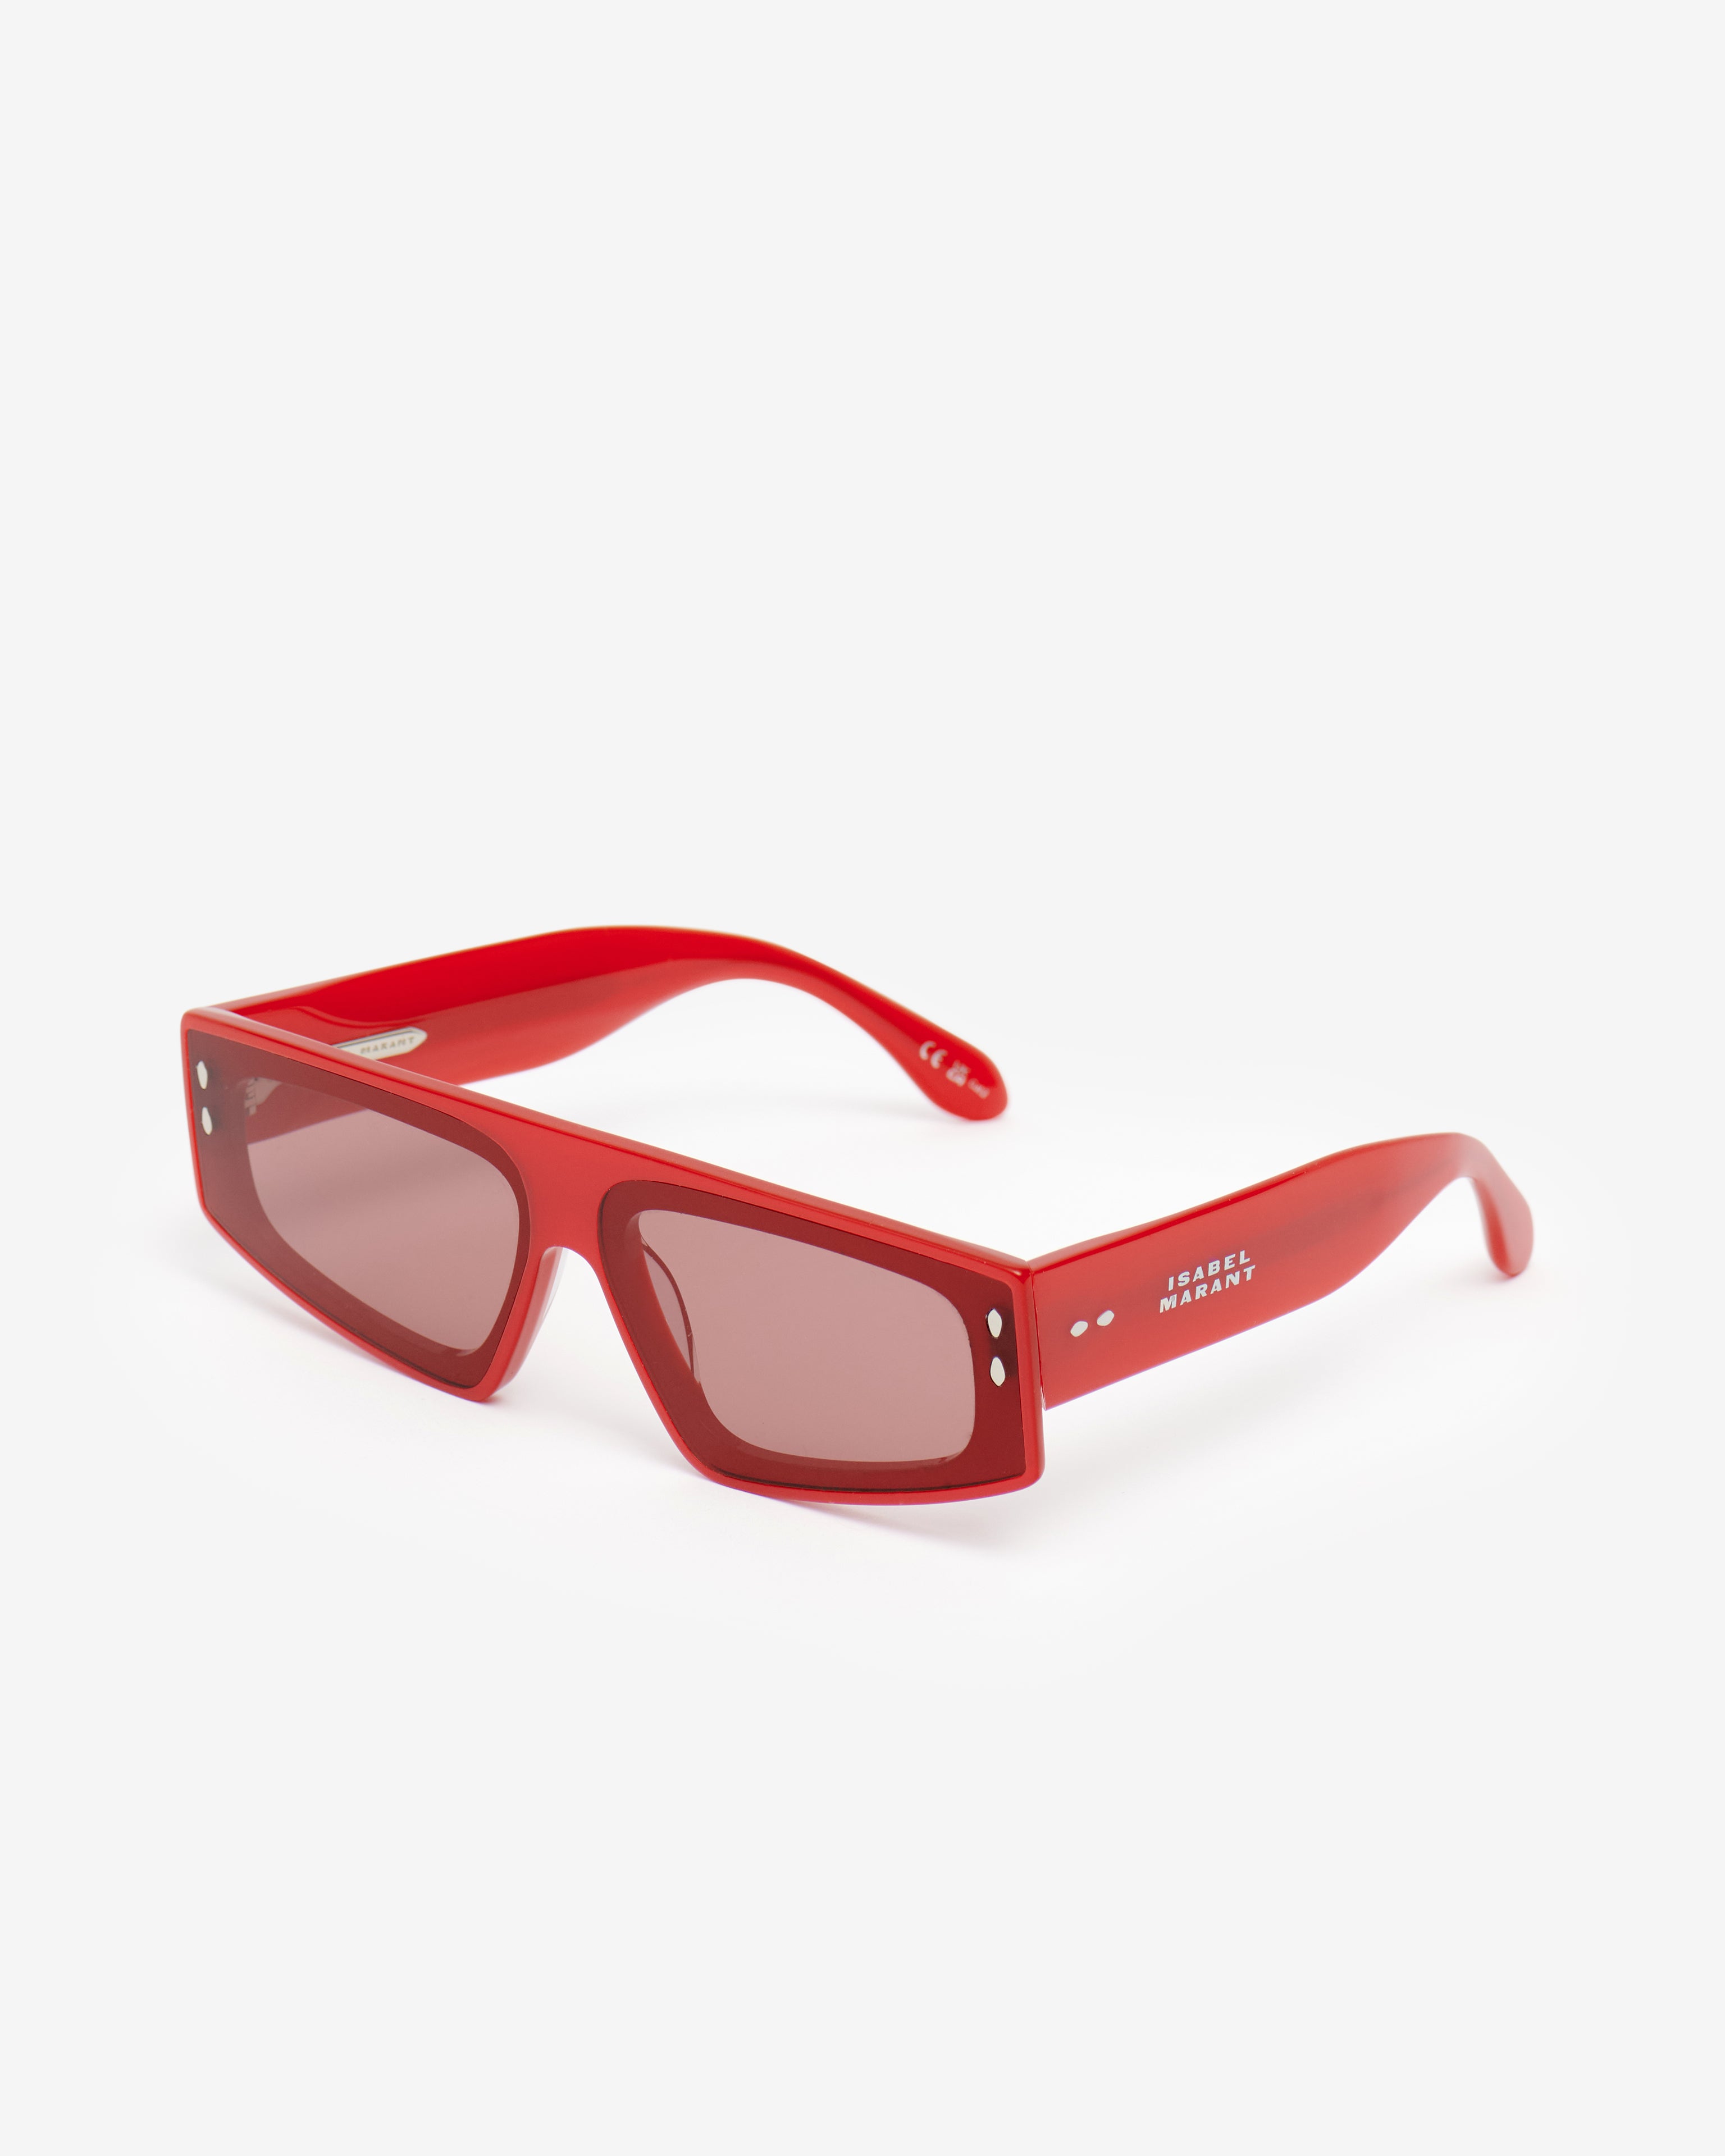 Zoomy occhiali da sole Woman Pearled red-burgundy 3